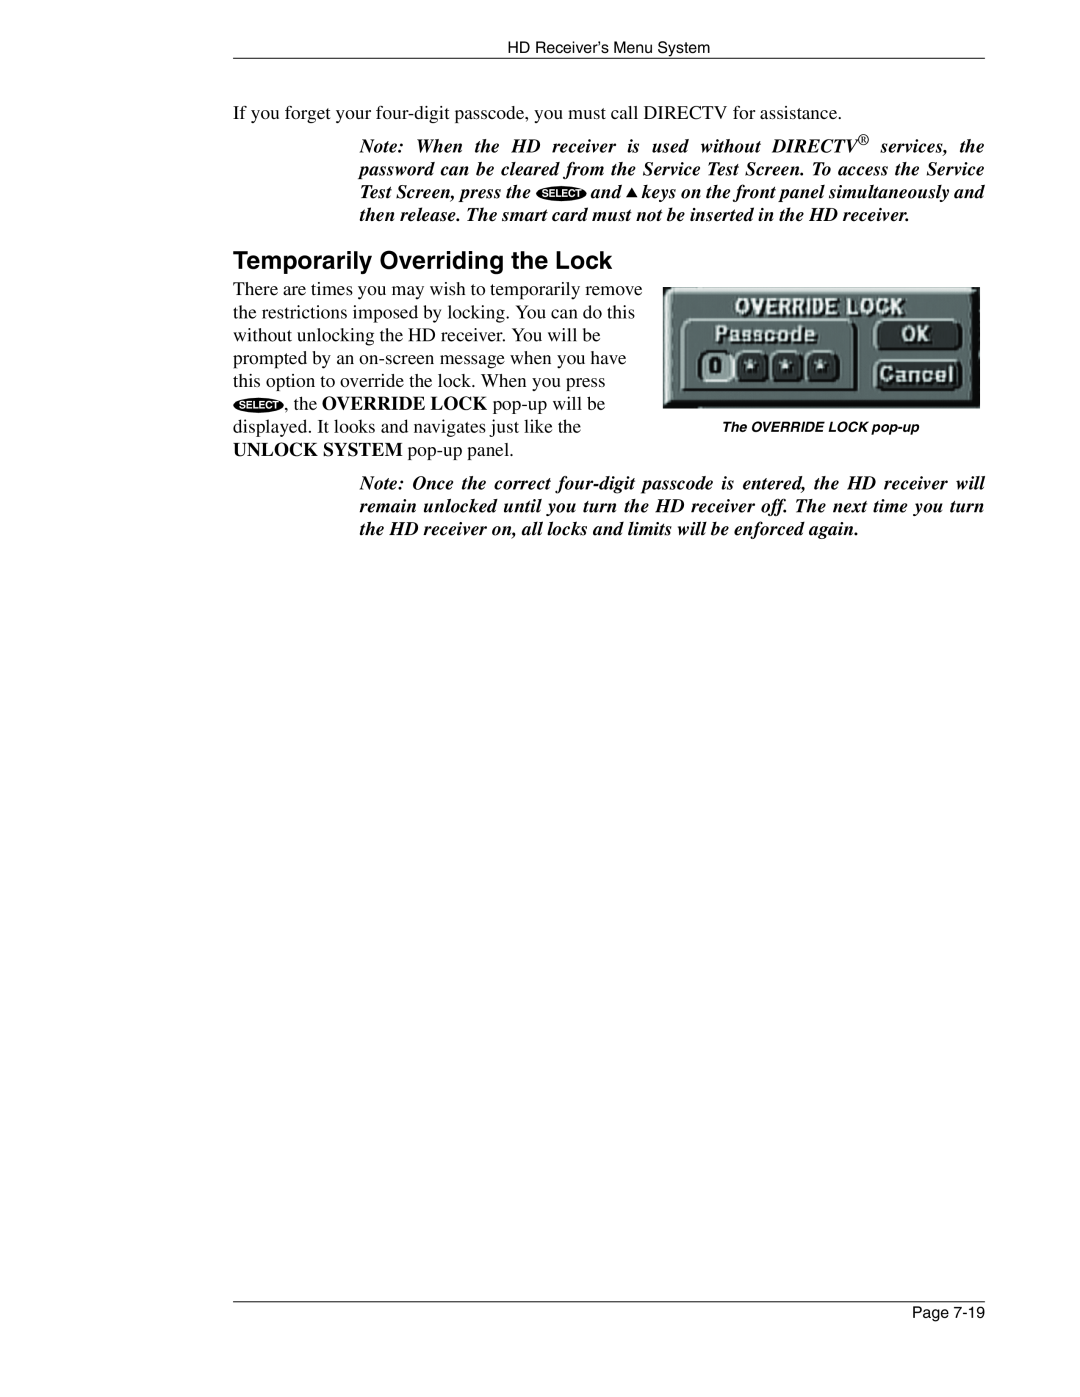 DirecTV HIRD-E86 manual Temporarily Overriding the Lock 